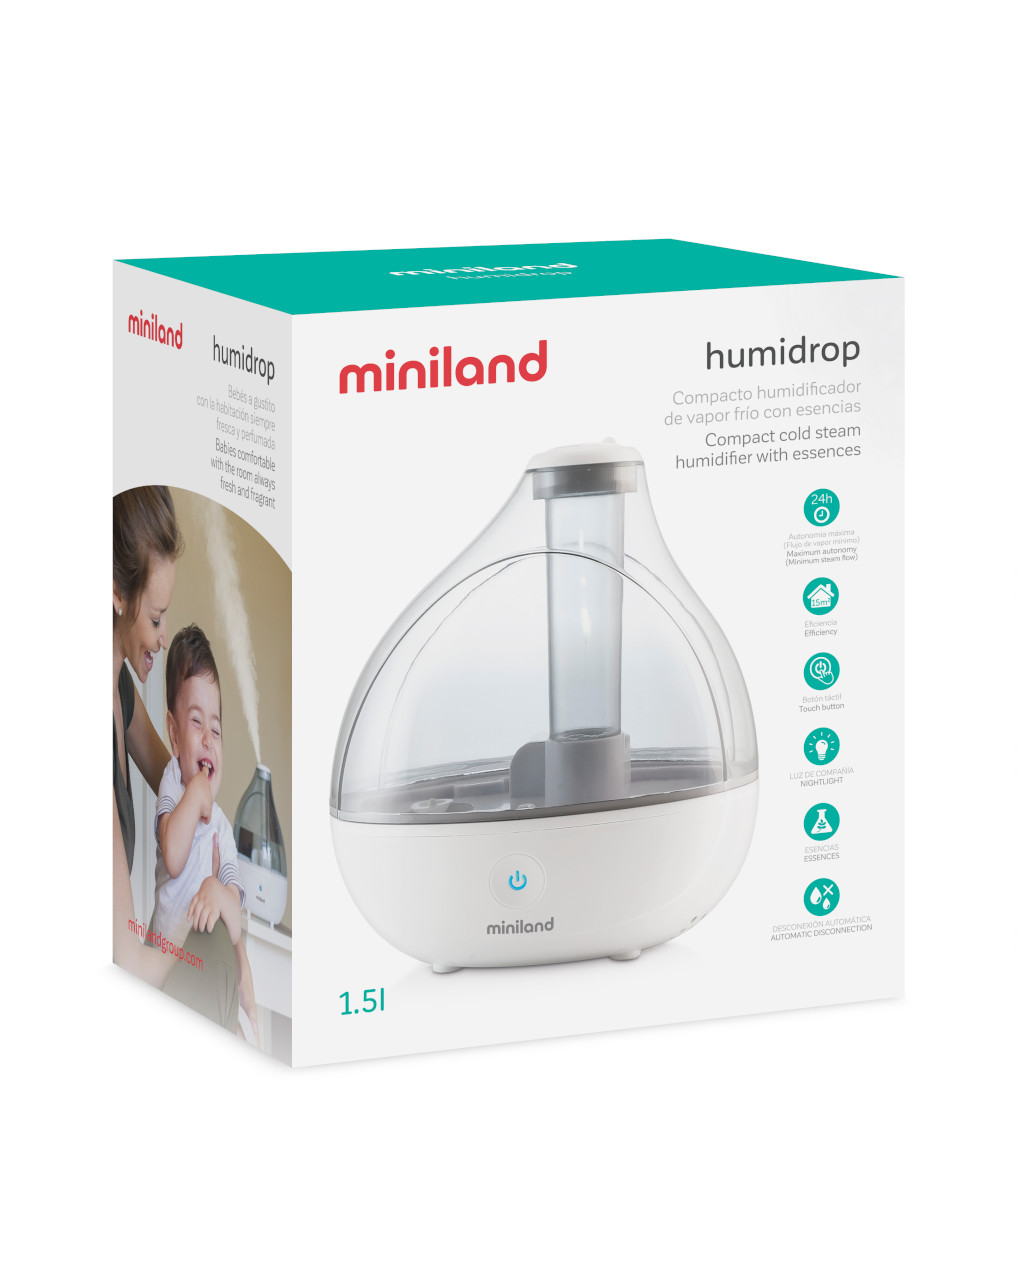 Humidificador humidrop - Miniland